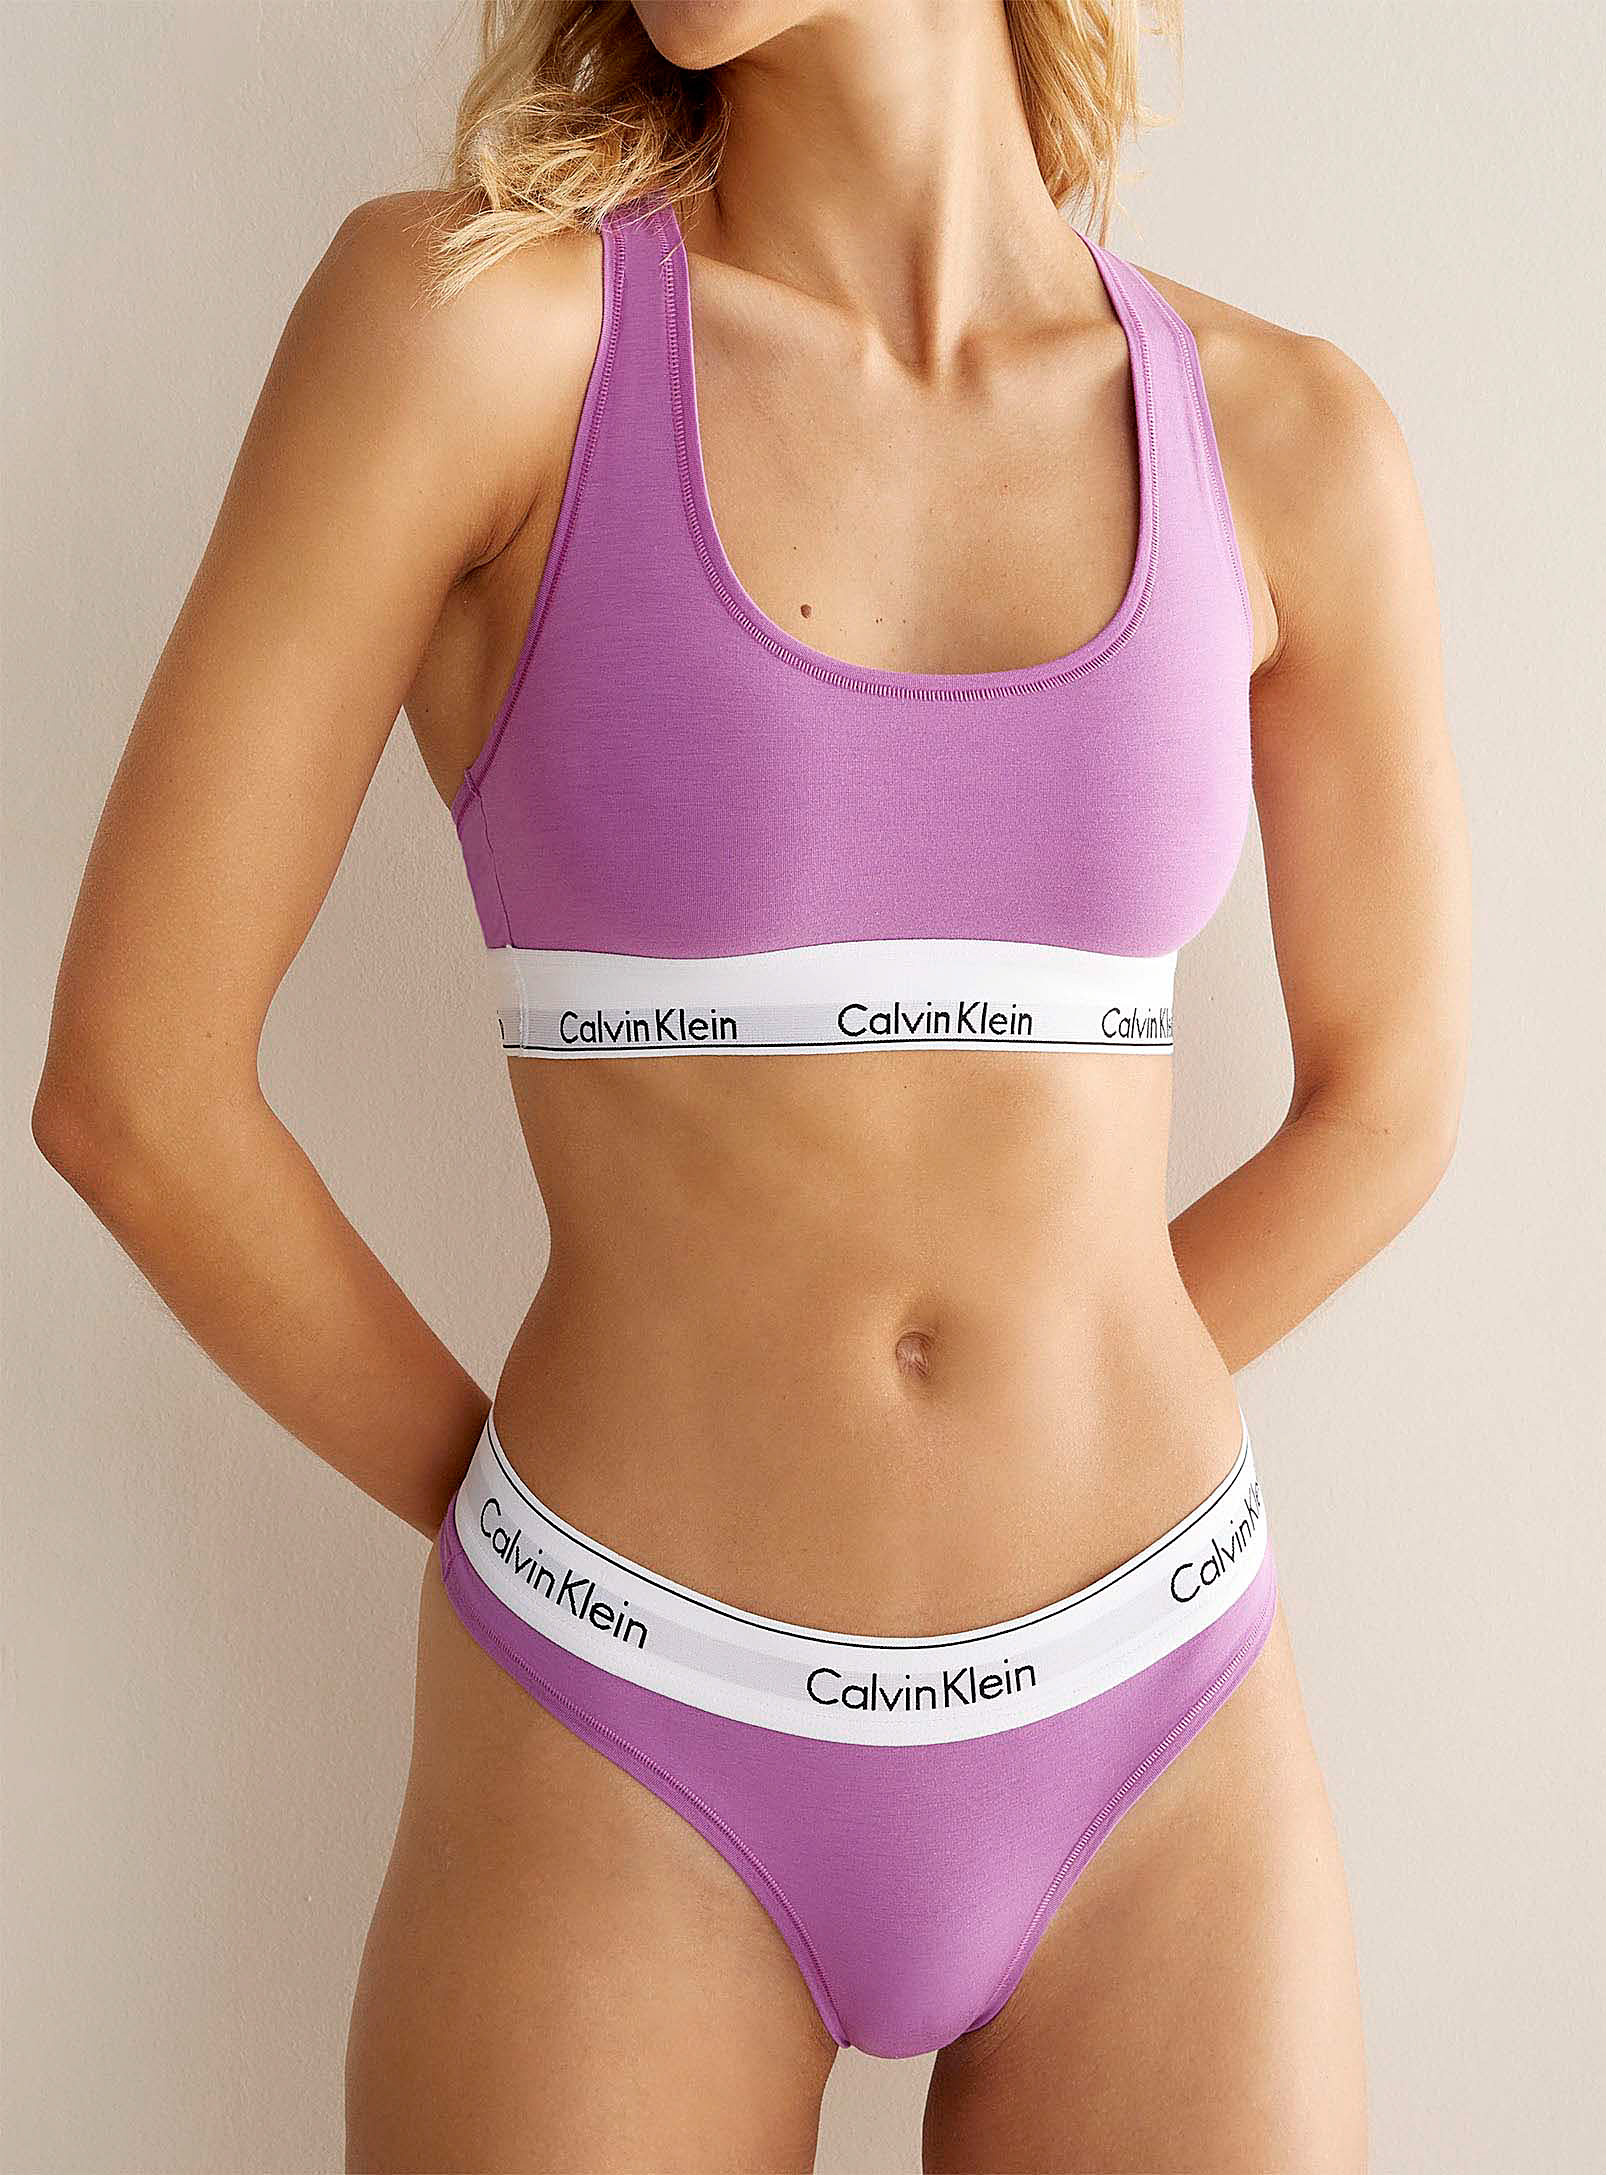 Calvin Klein Wo Modern Cotton Thong Underwear F3786 Charcoal